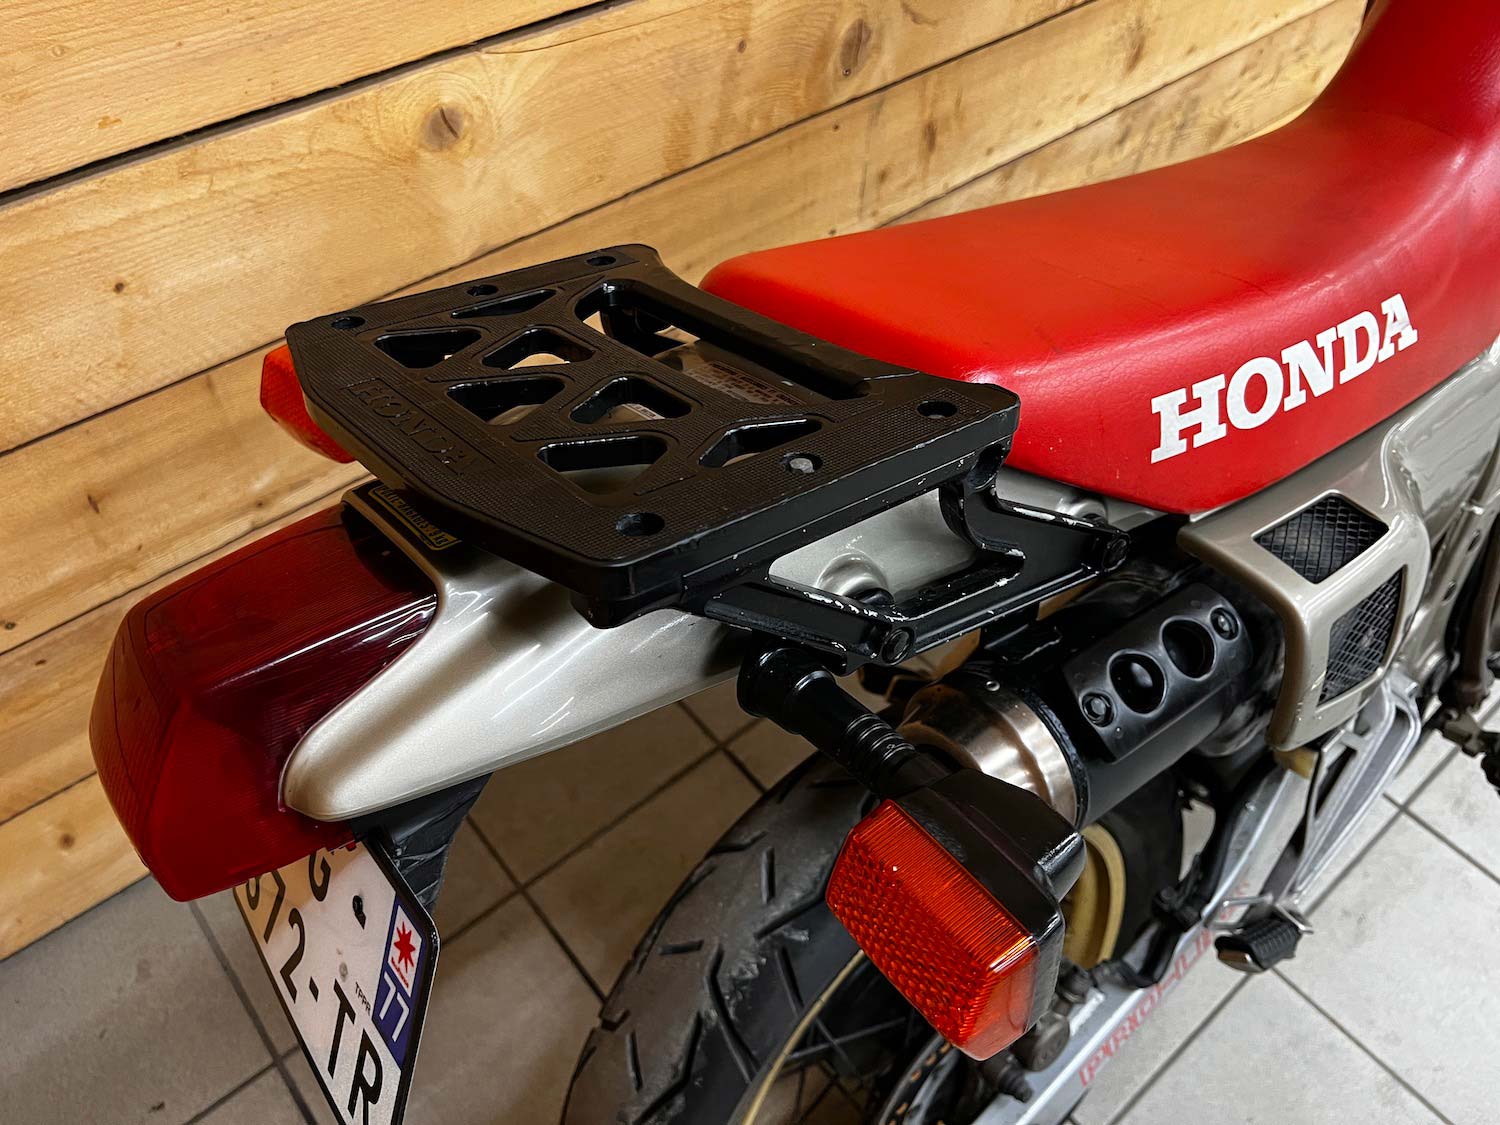 Honda_dominator_Cezanne_classic_Motorcycle_7-152.jpg